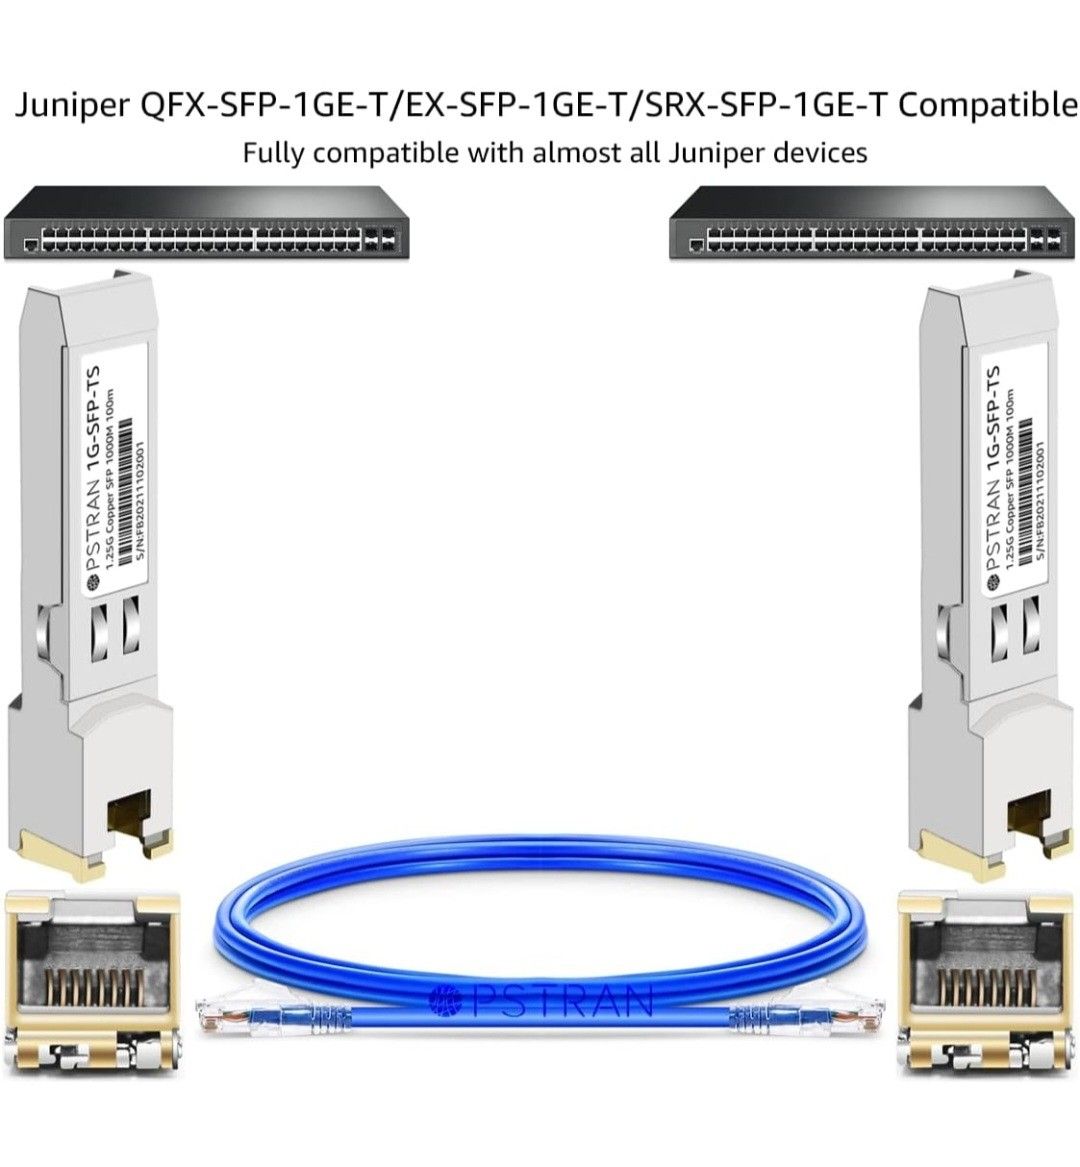 OPSTRAN 1000BASE-T SFPモジュール、Juniper QFX-SFP-1GE-T/EX-SFP-1GE